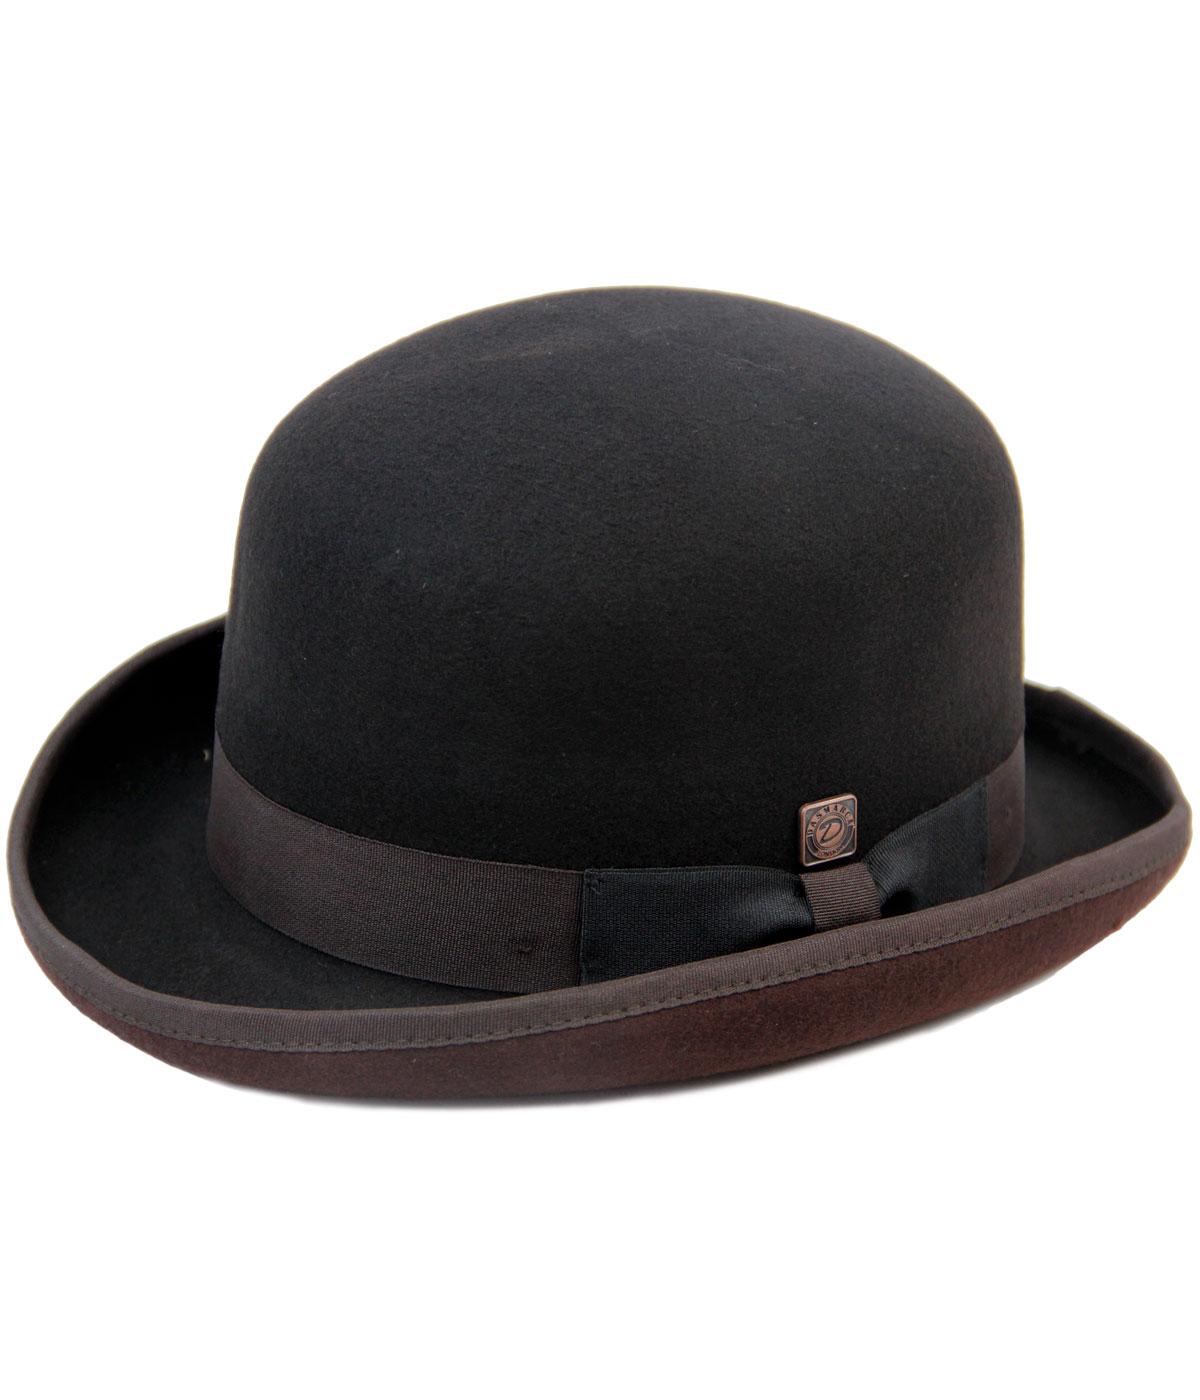 DASMARCA Brooke Retro 40s Bowler Hat in Black/Brown